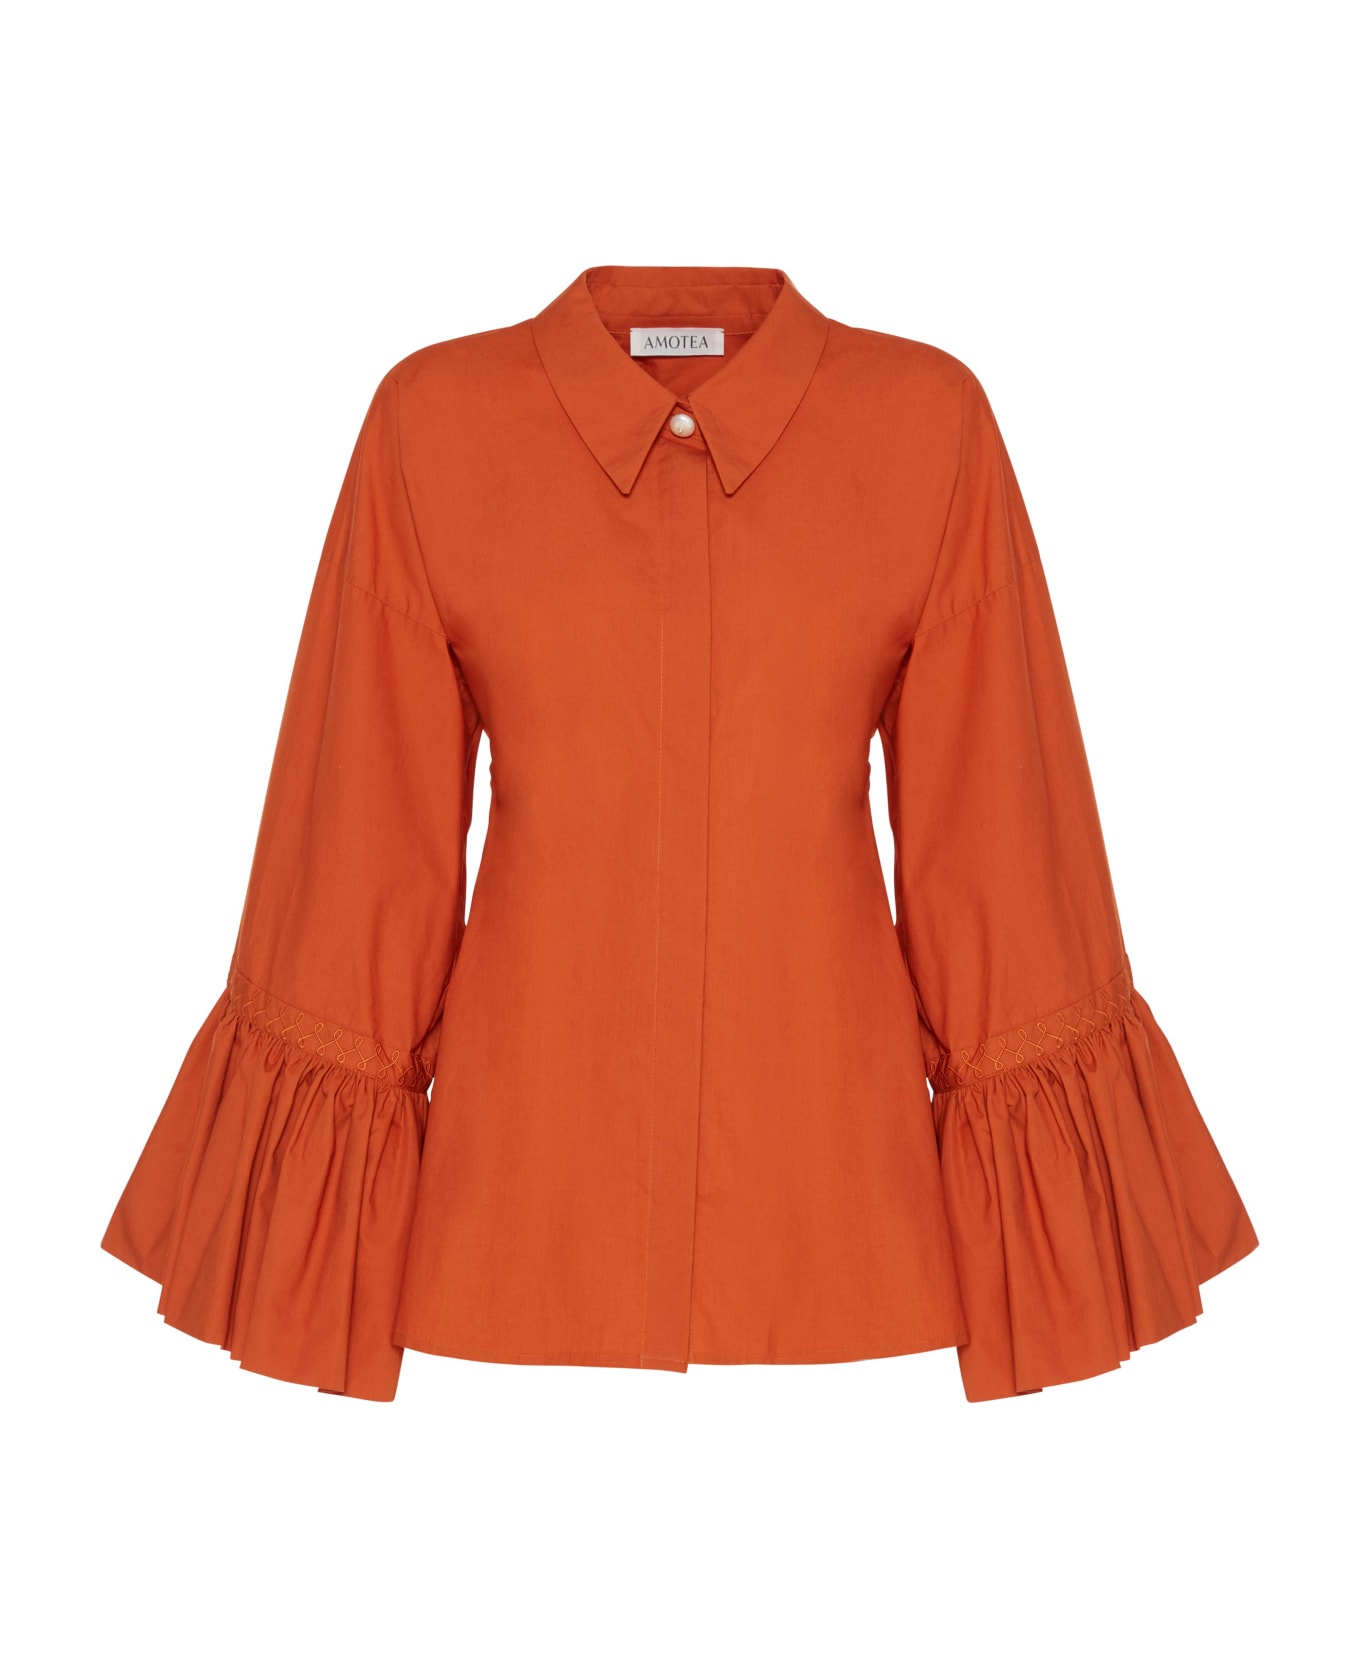 Amotea Claudia Shirt In Orange Poplin - Orange ブラウス